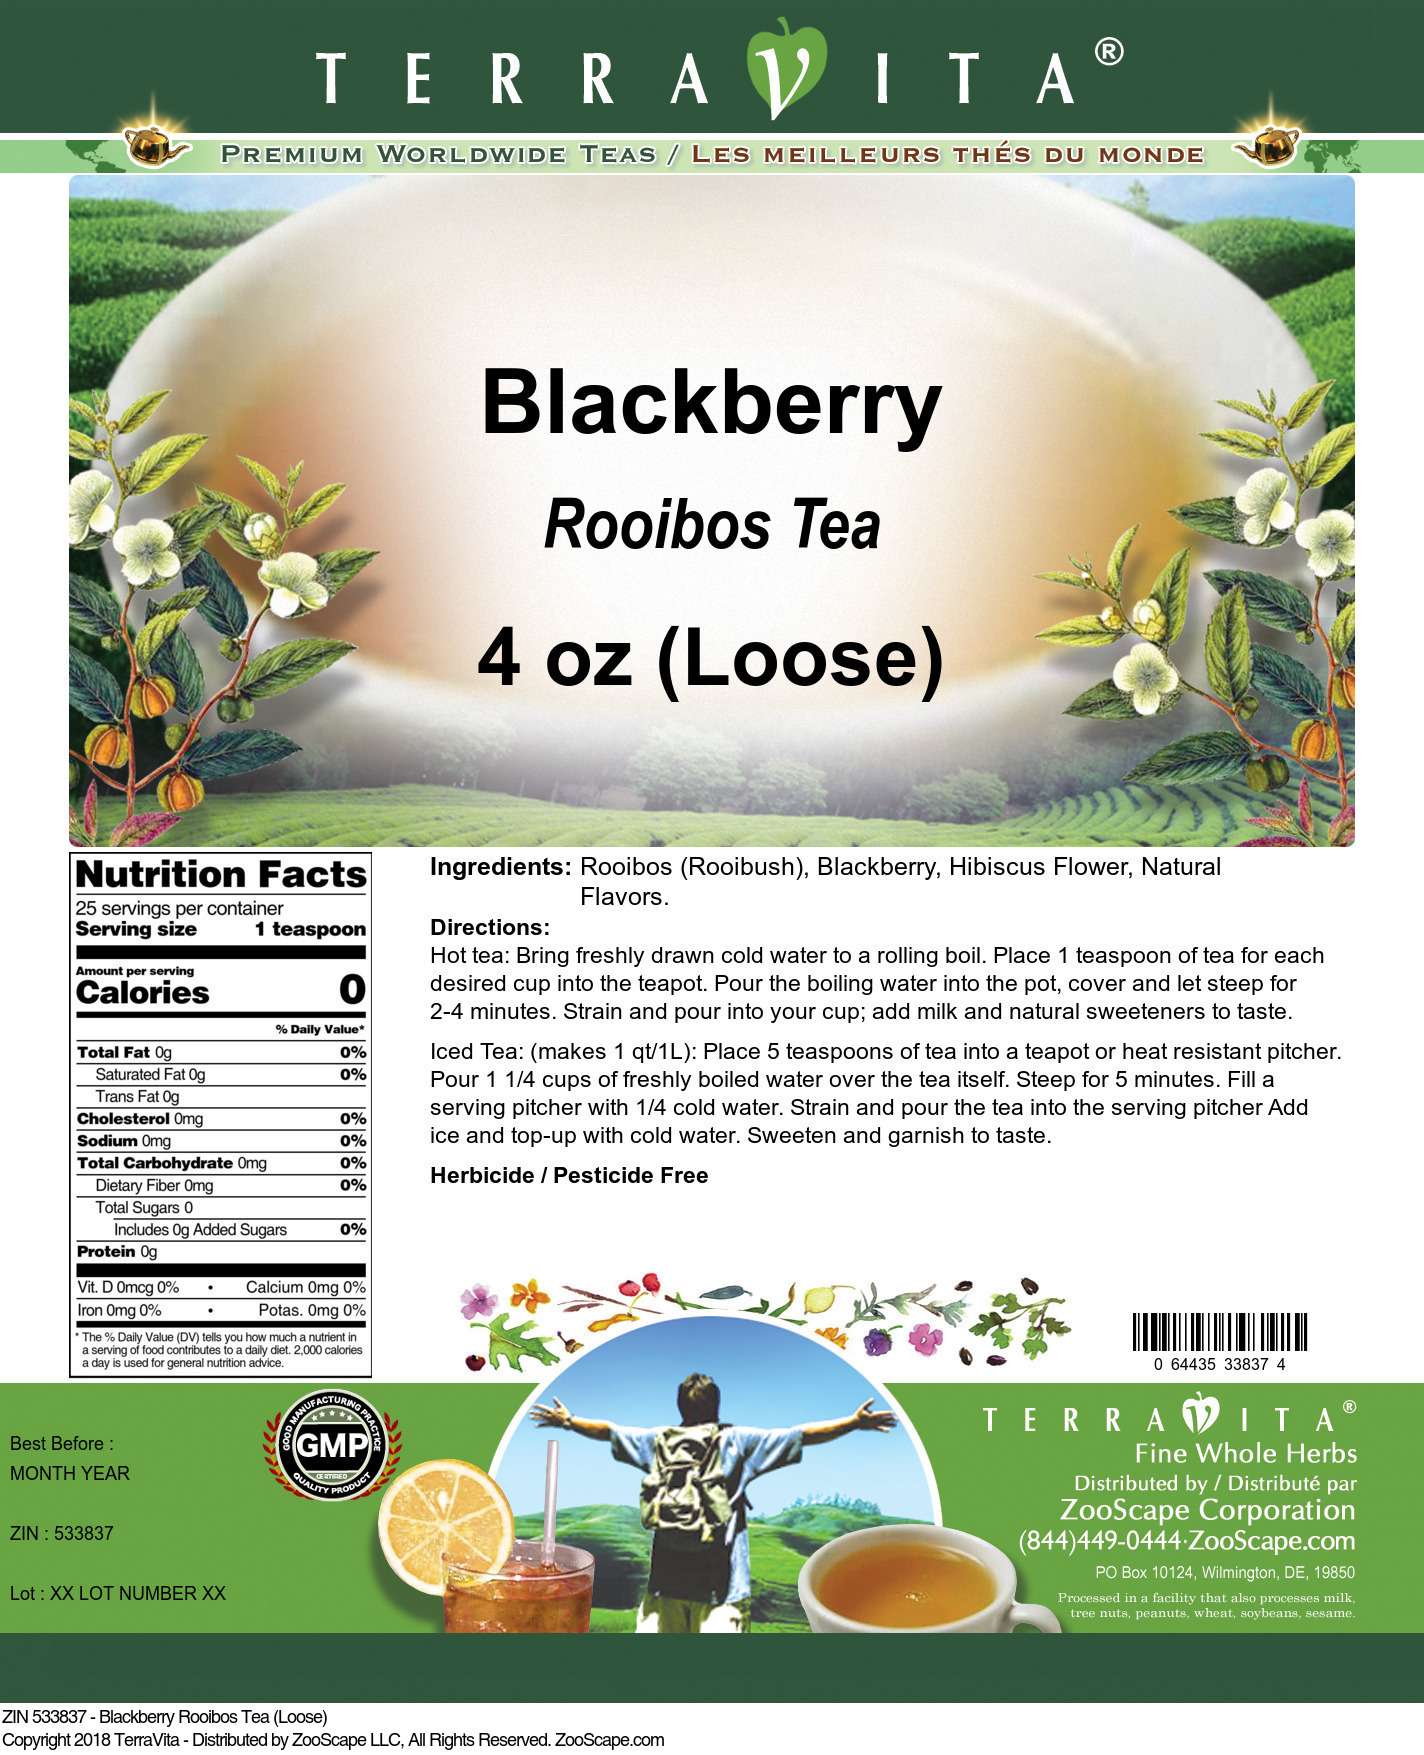 Blackberry Rooibos Tea (Loose) - Label